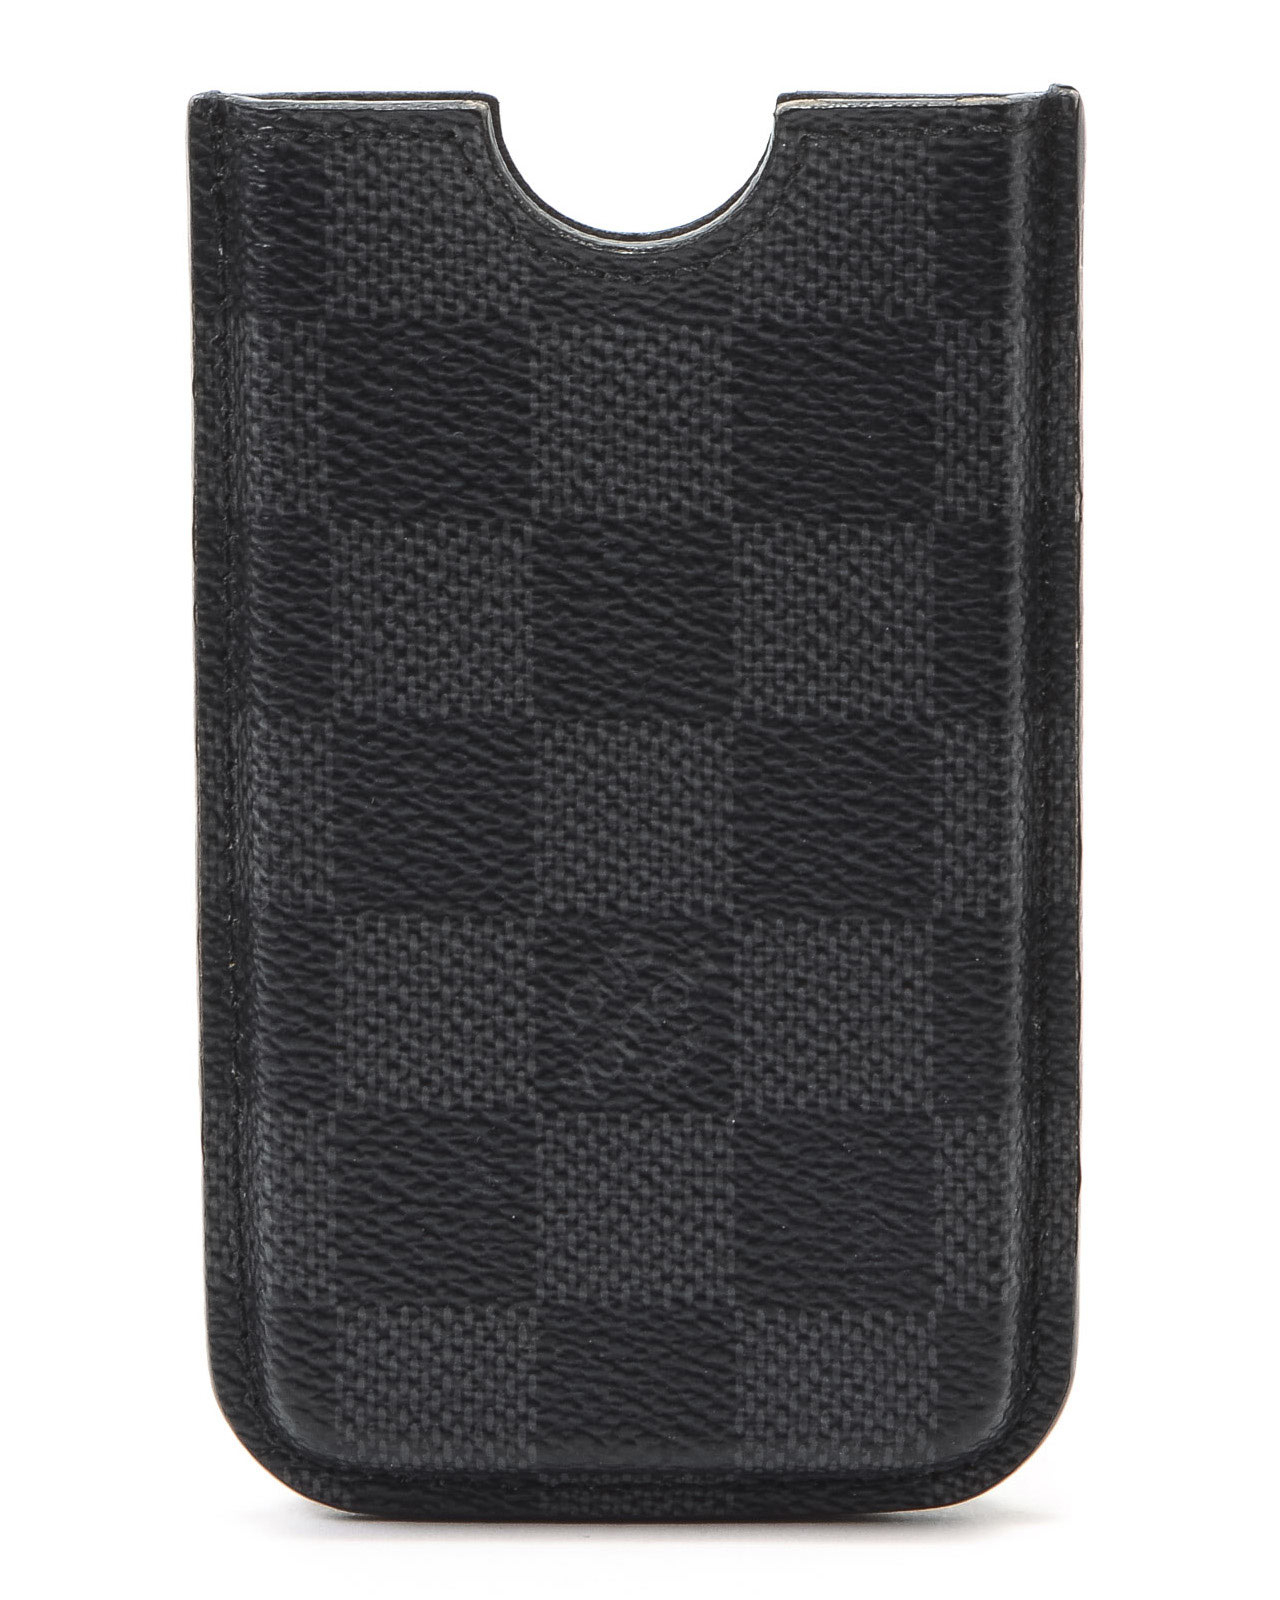 Lyst - Louis Vuitton Black Damier Phone Case in Black